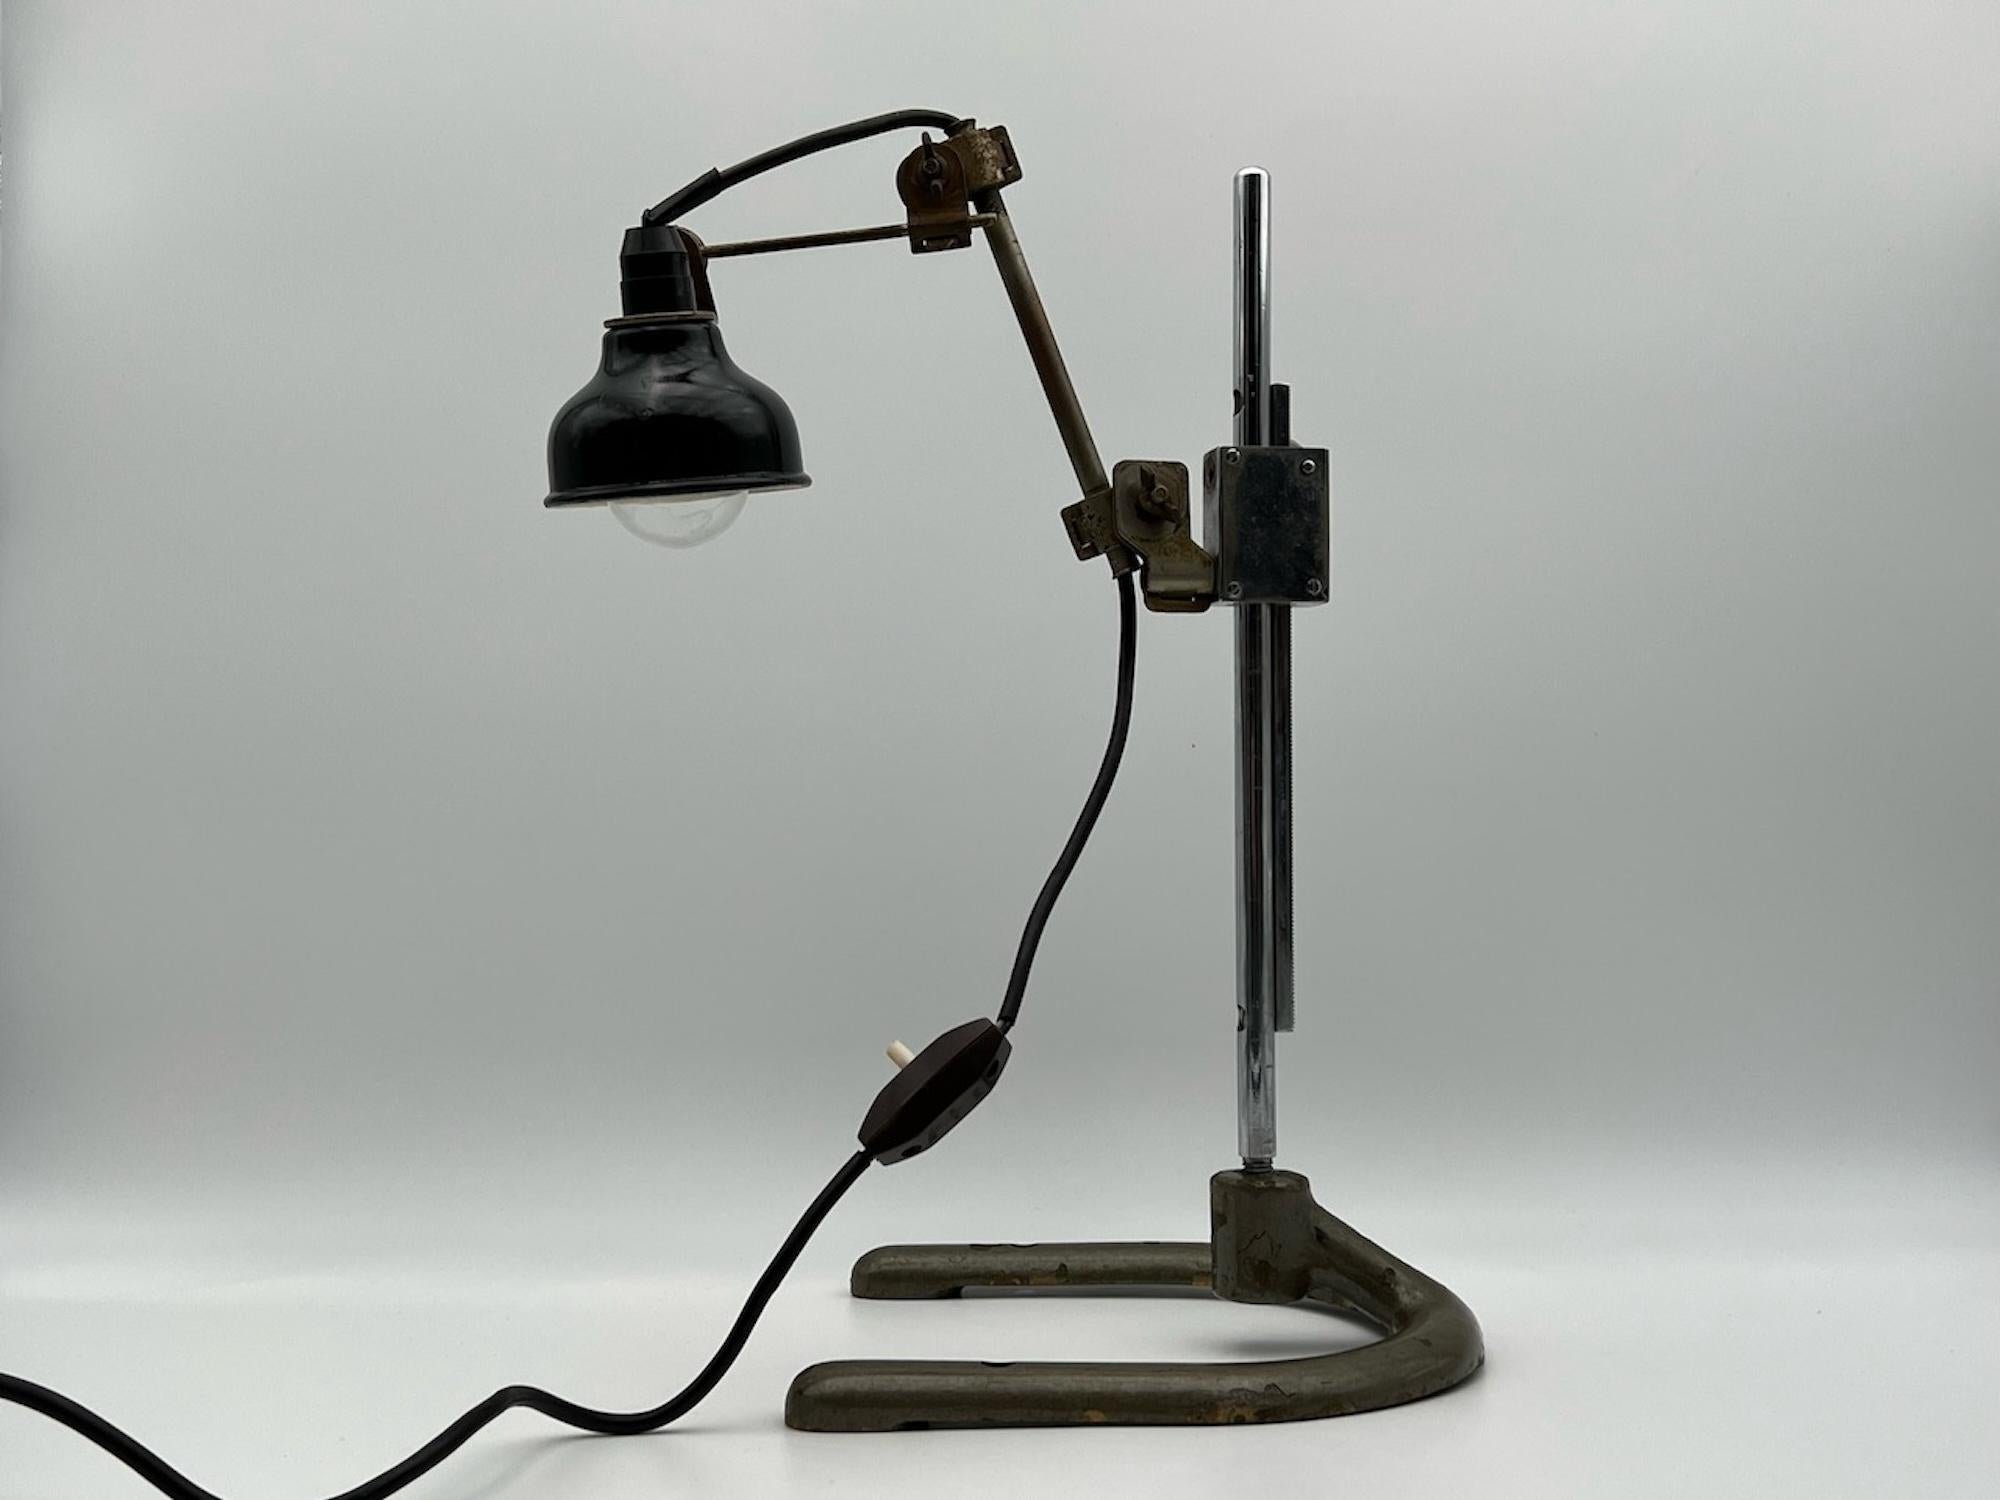 Brutalist Italian Artisanal Lamp in Metal and Bakelite, 1970s For Sale 4